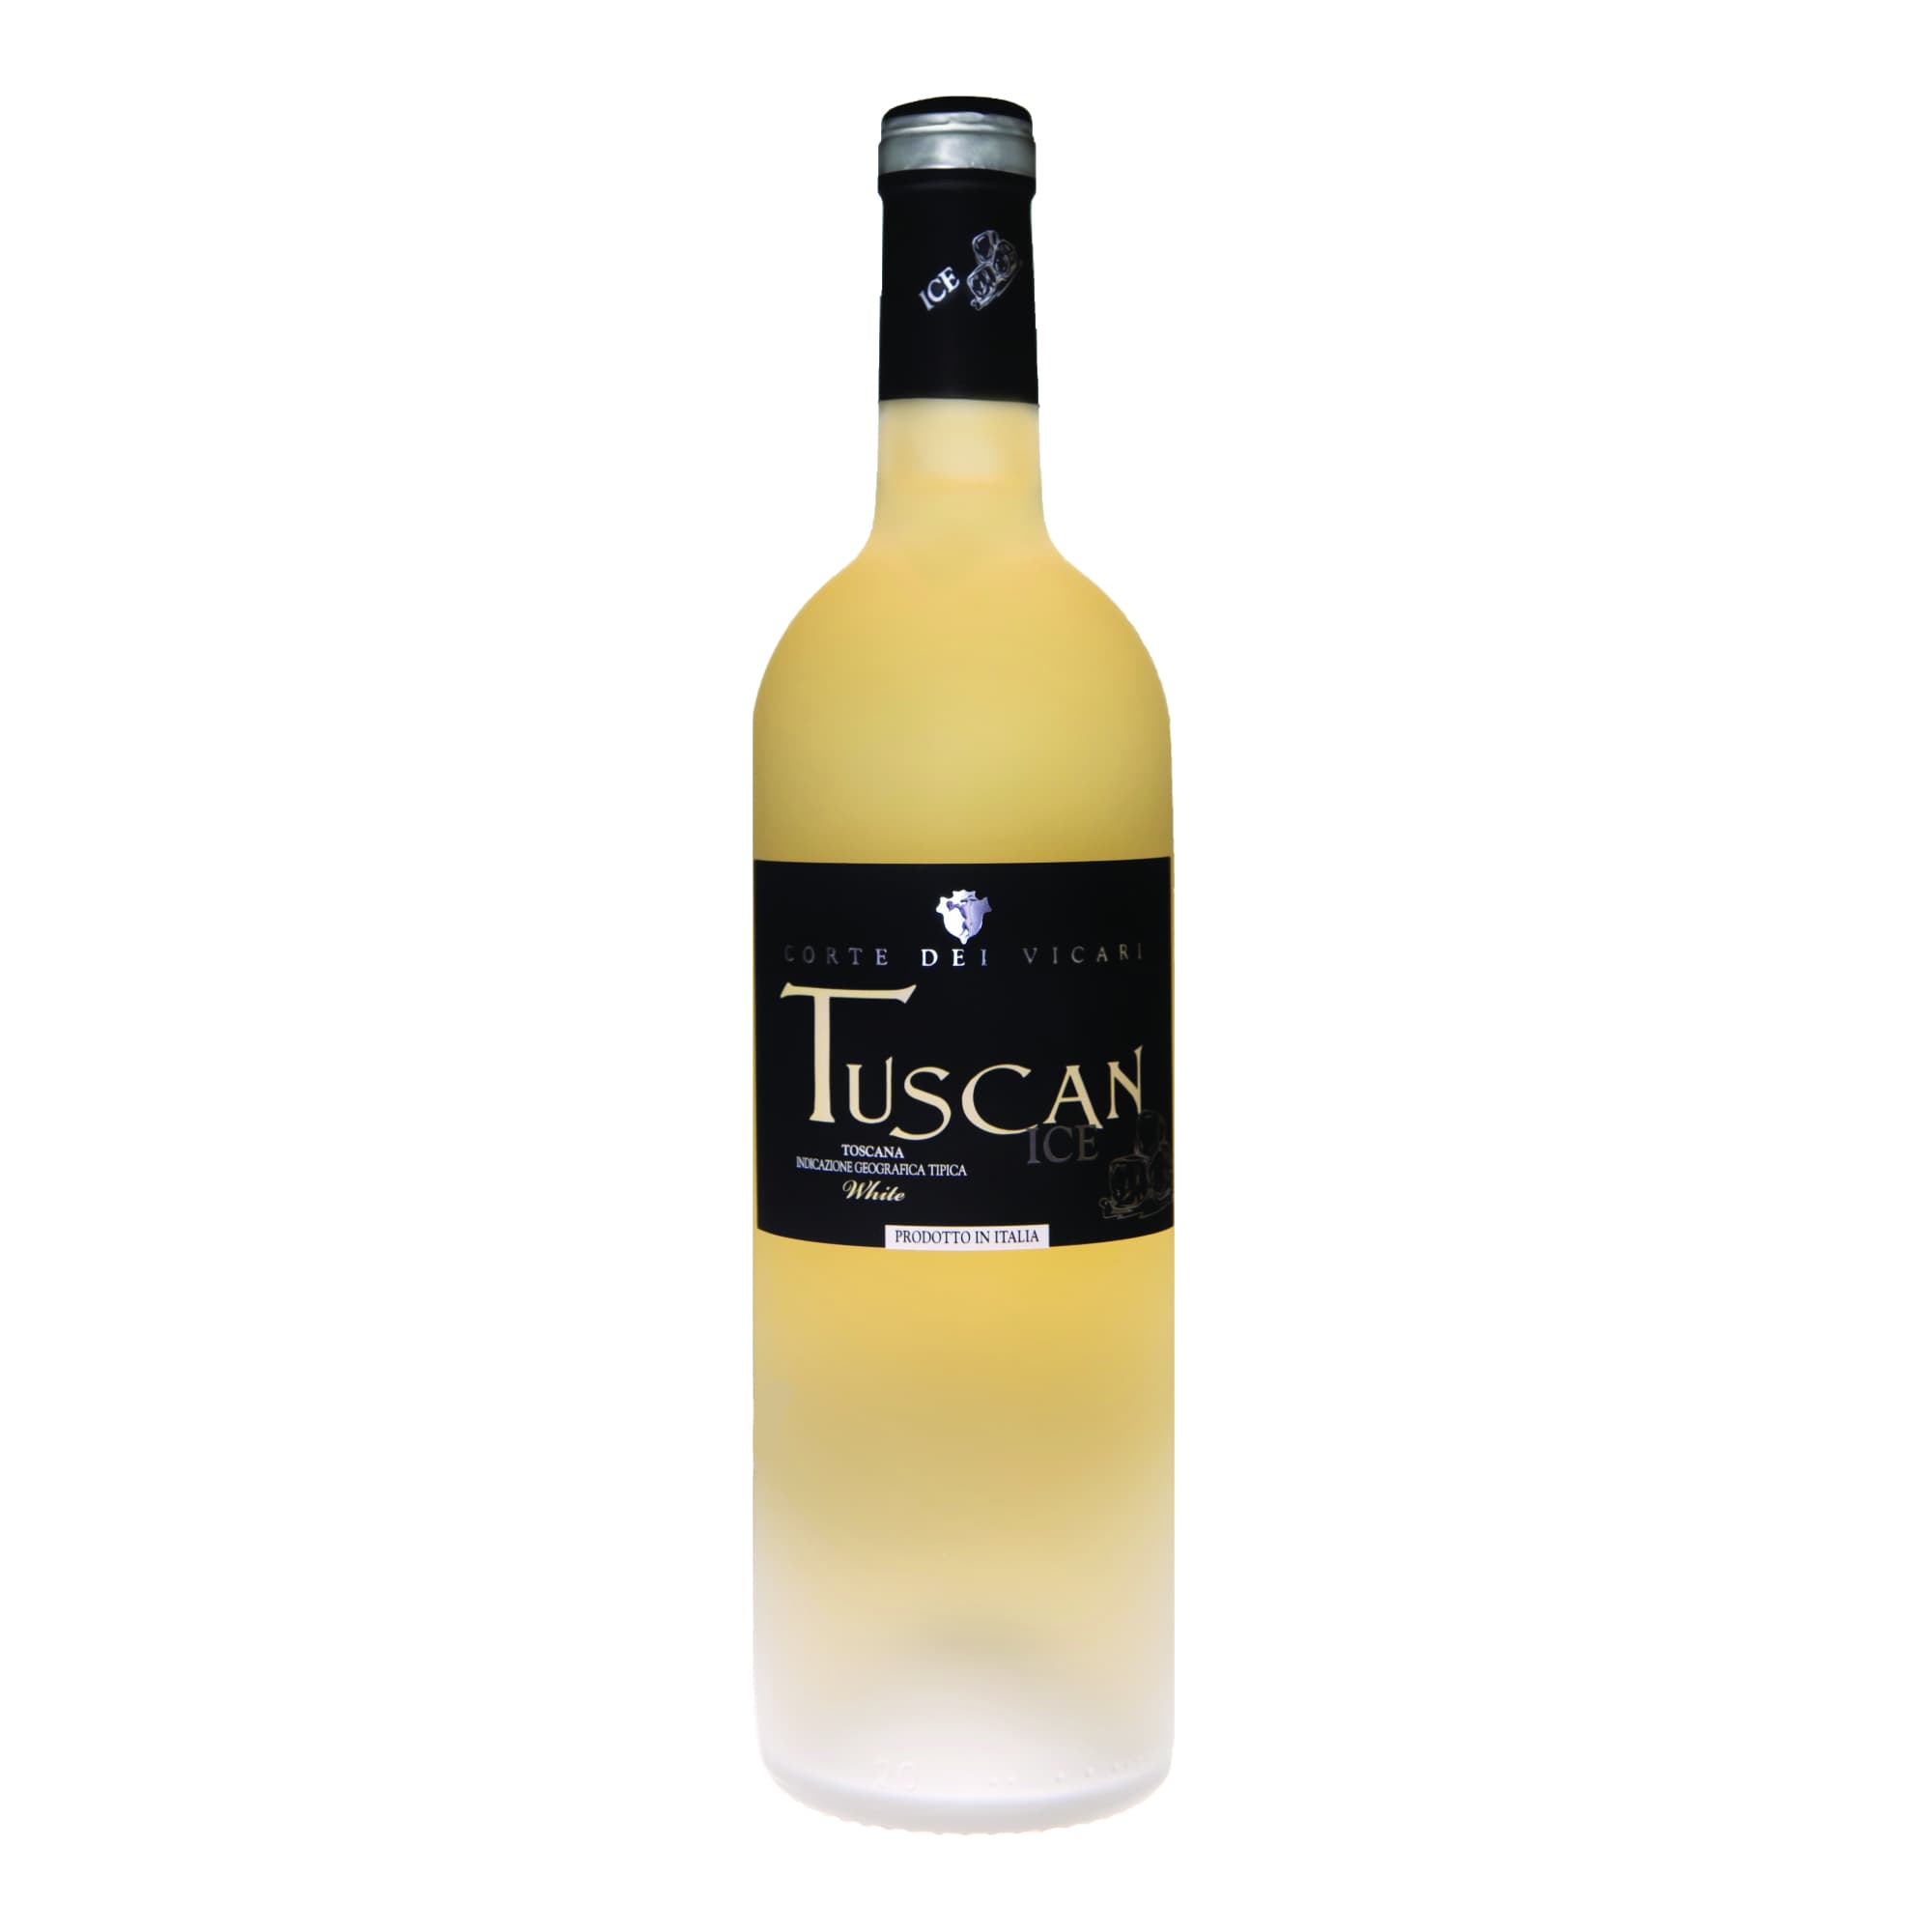 Vino Tuscan IGT ICE Bianco "Corte dei Vicari"